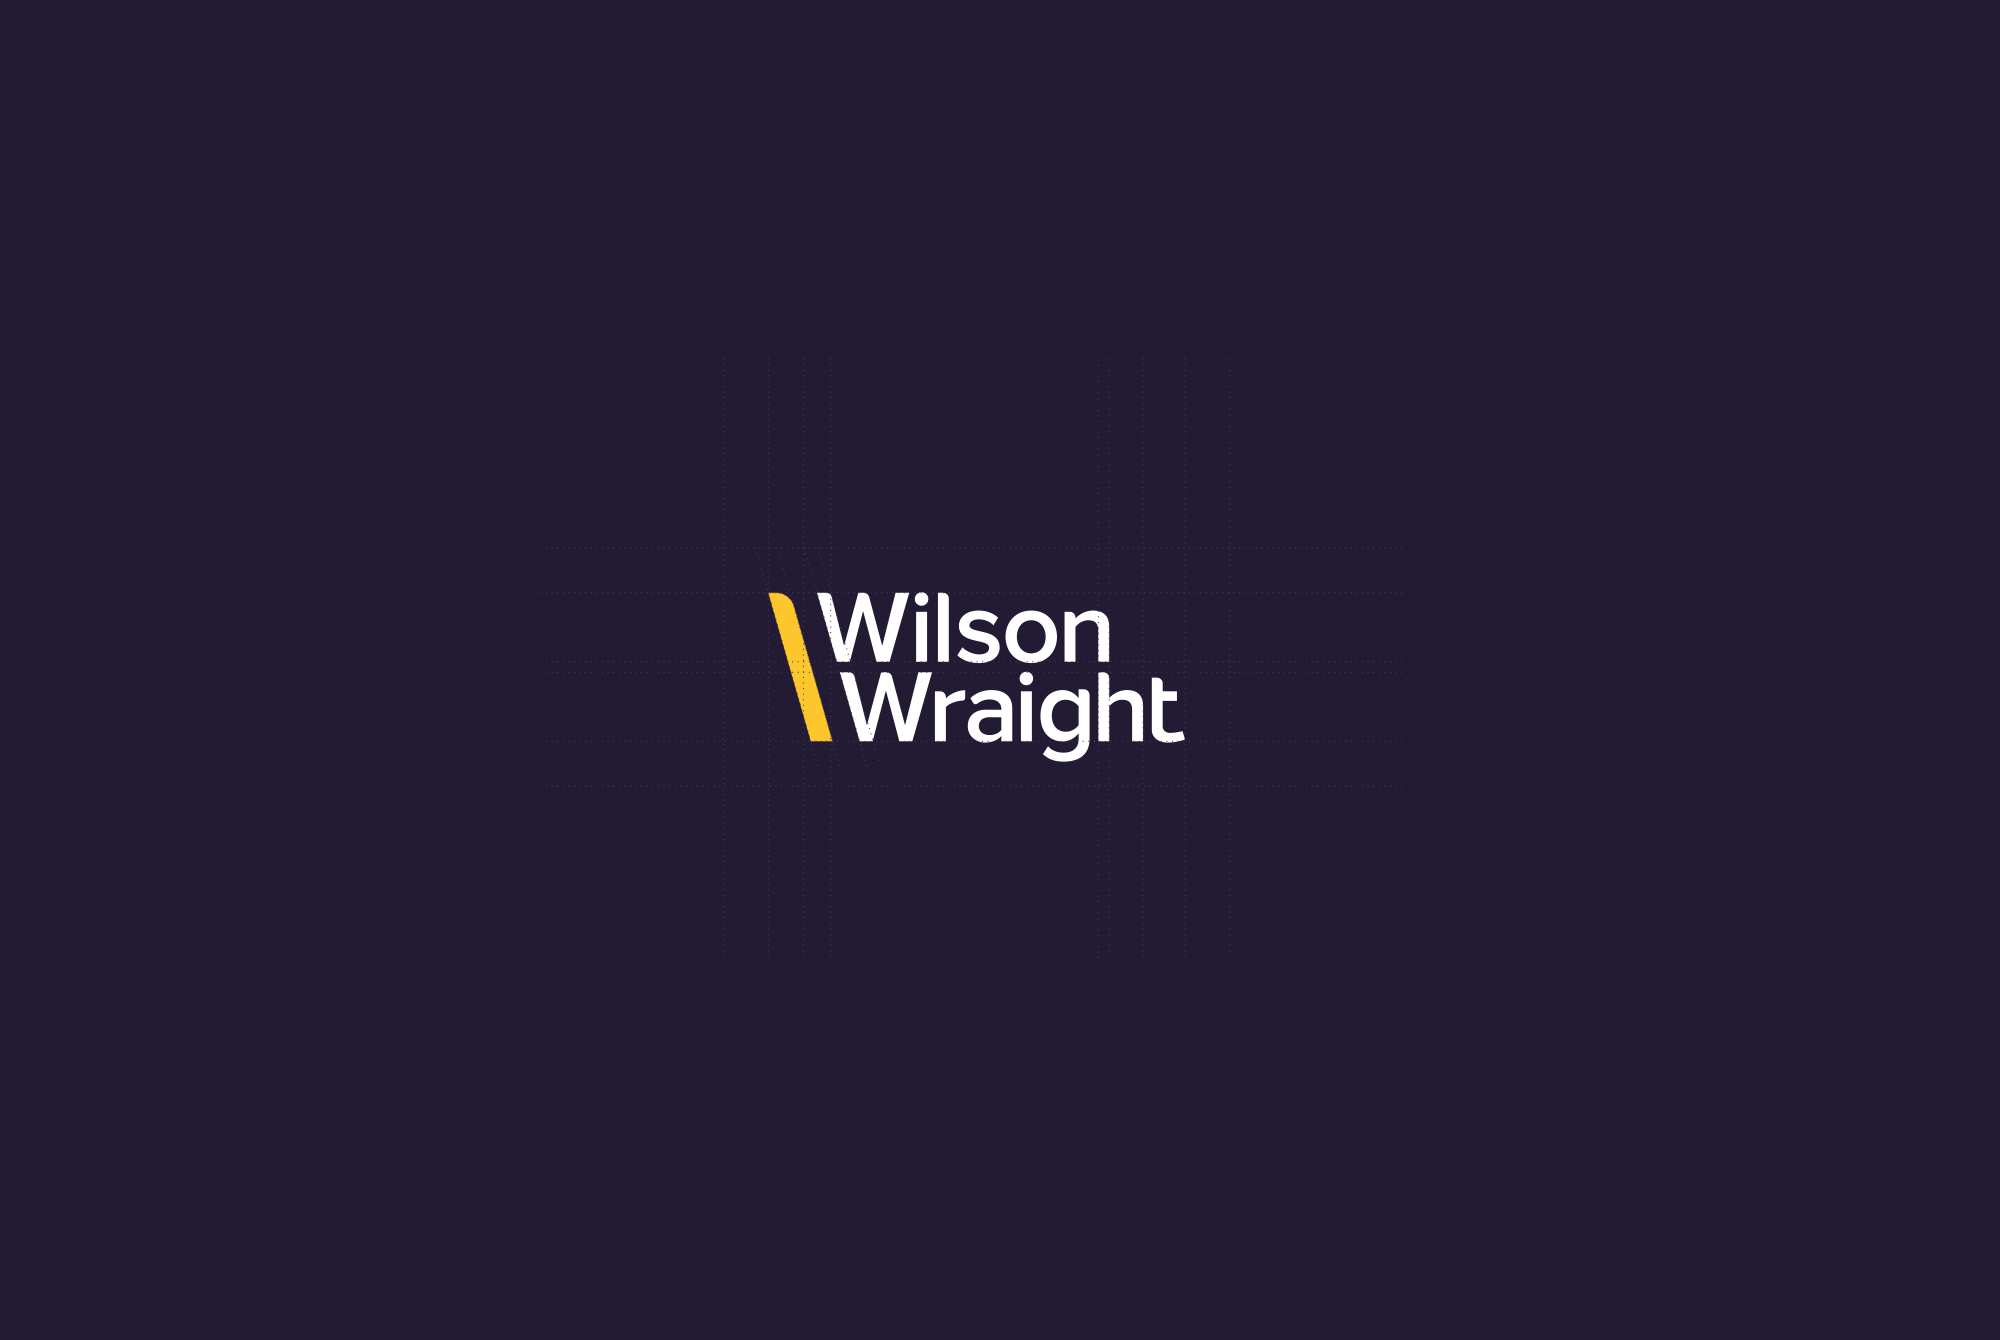 Ten Fathoms - Wilson Wraight - Brand Visual Identity